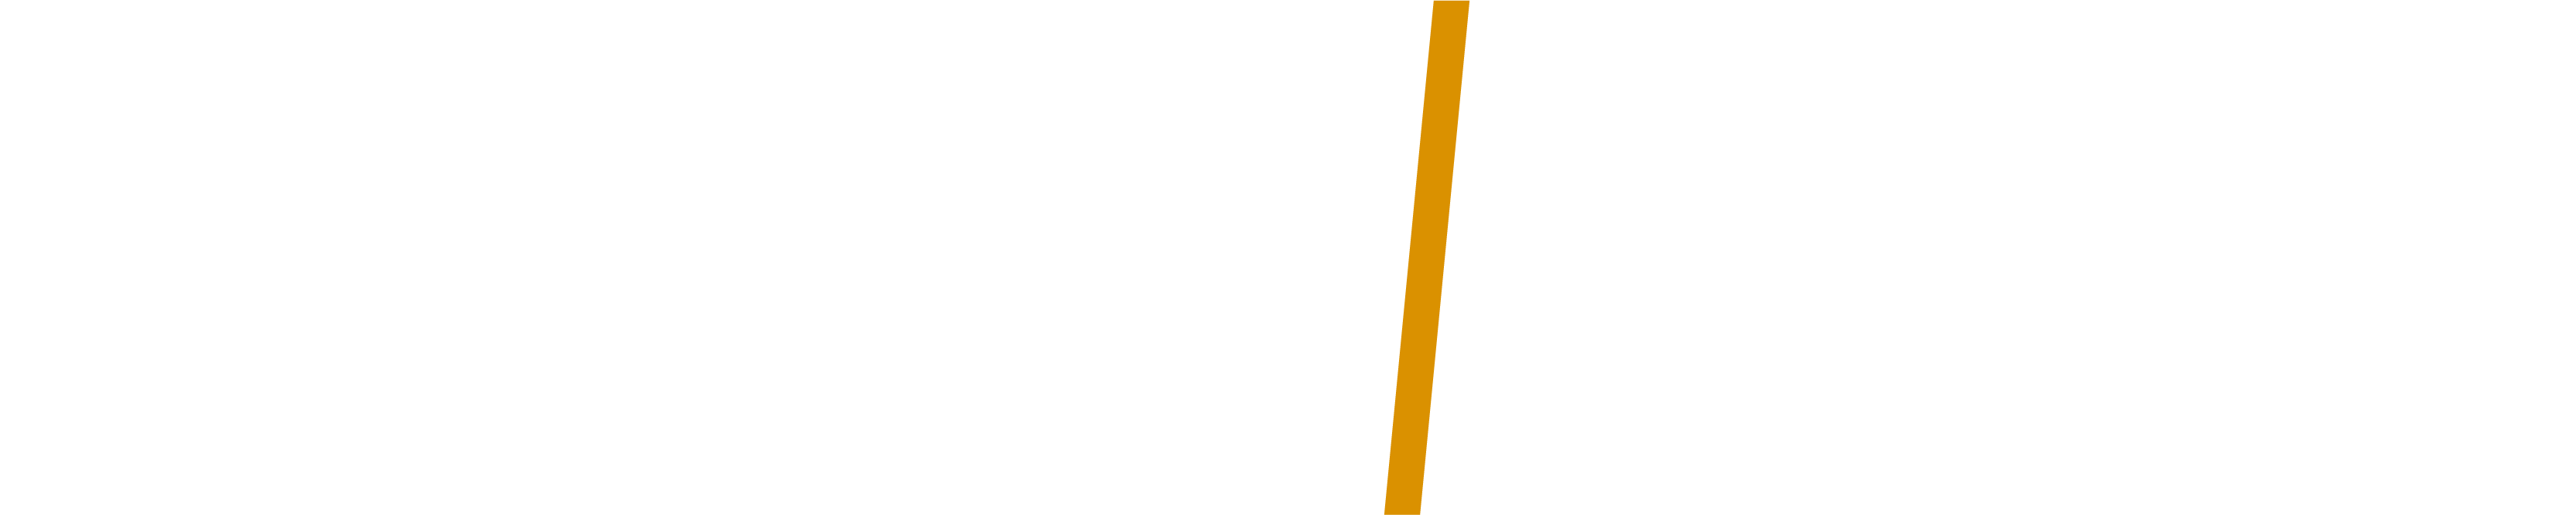 CRC logo_white